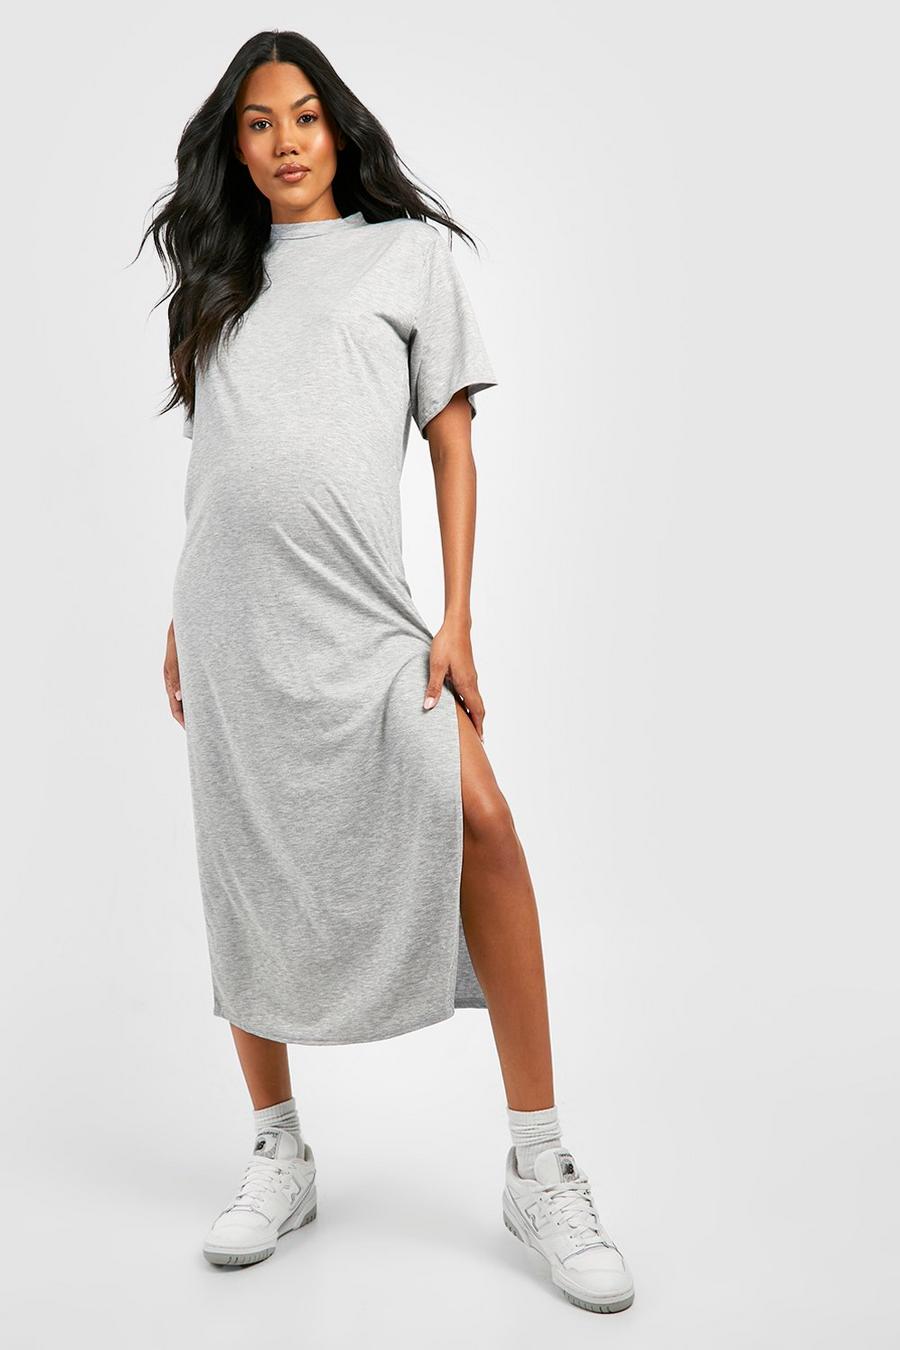 Grey marl grigio Maternity T-shirt Midaxi Dress